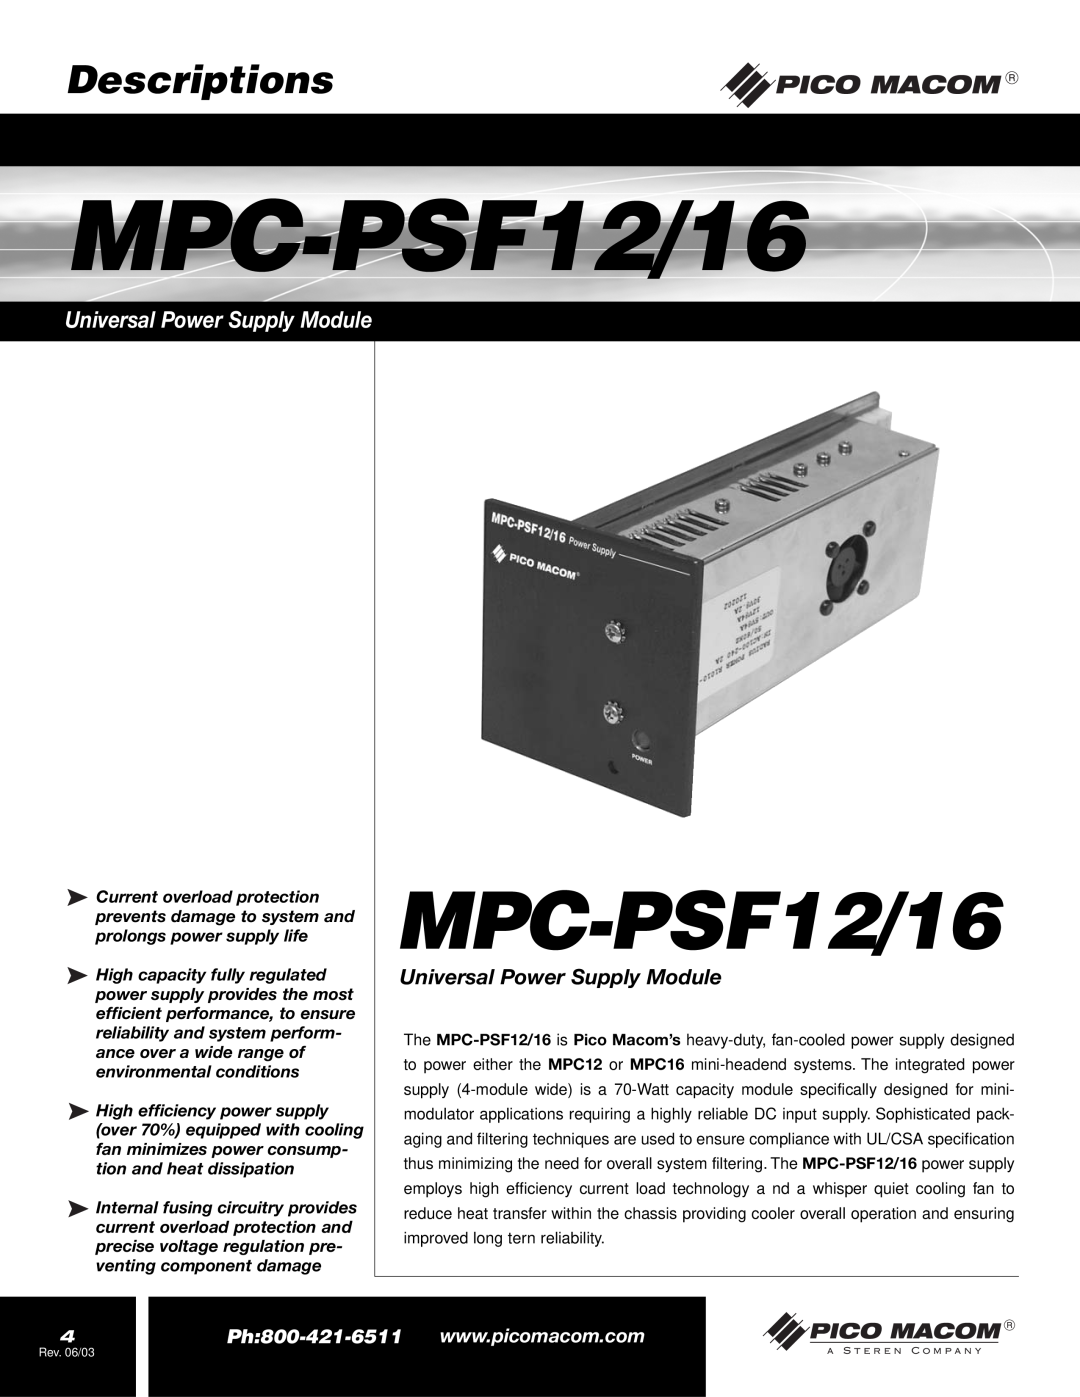 Pico Macom MPC-PSF16 operation manual Descriptions, MPC-PSF12/16, Universal Power Supply Module 